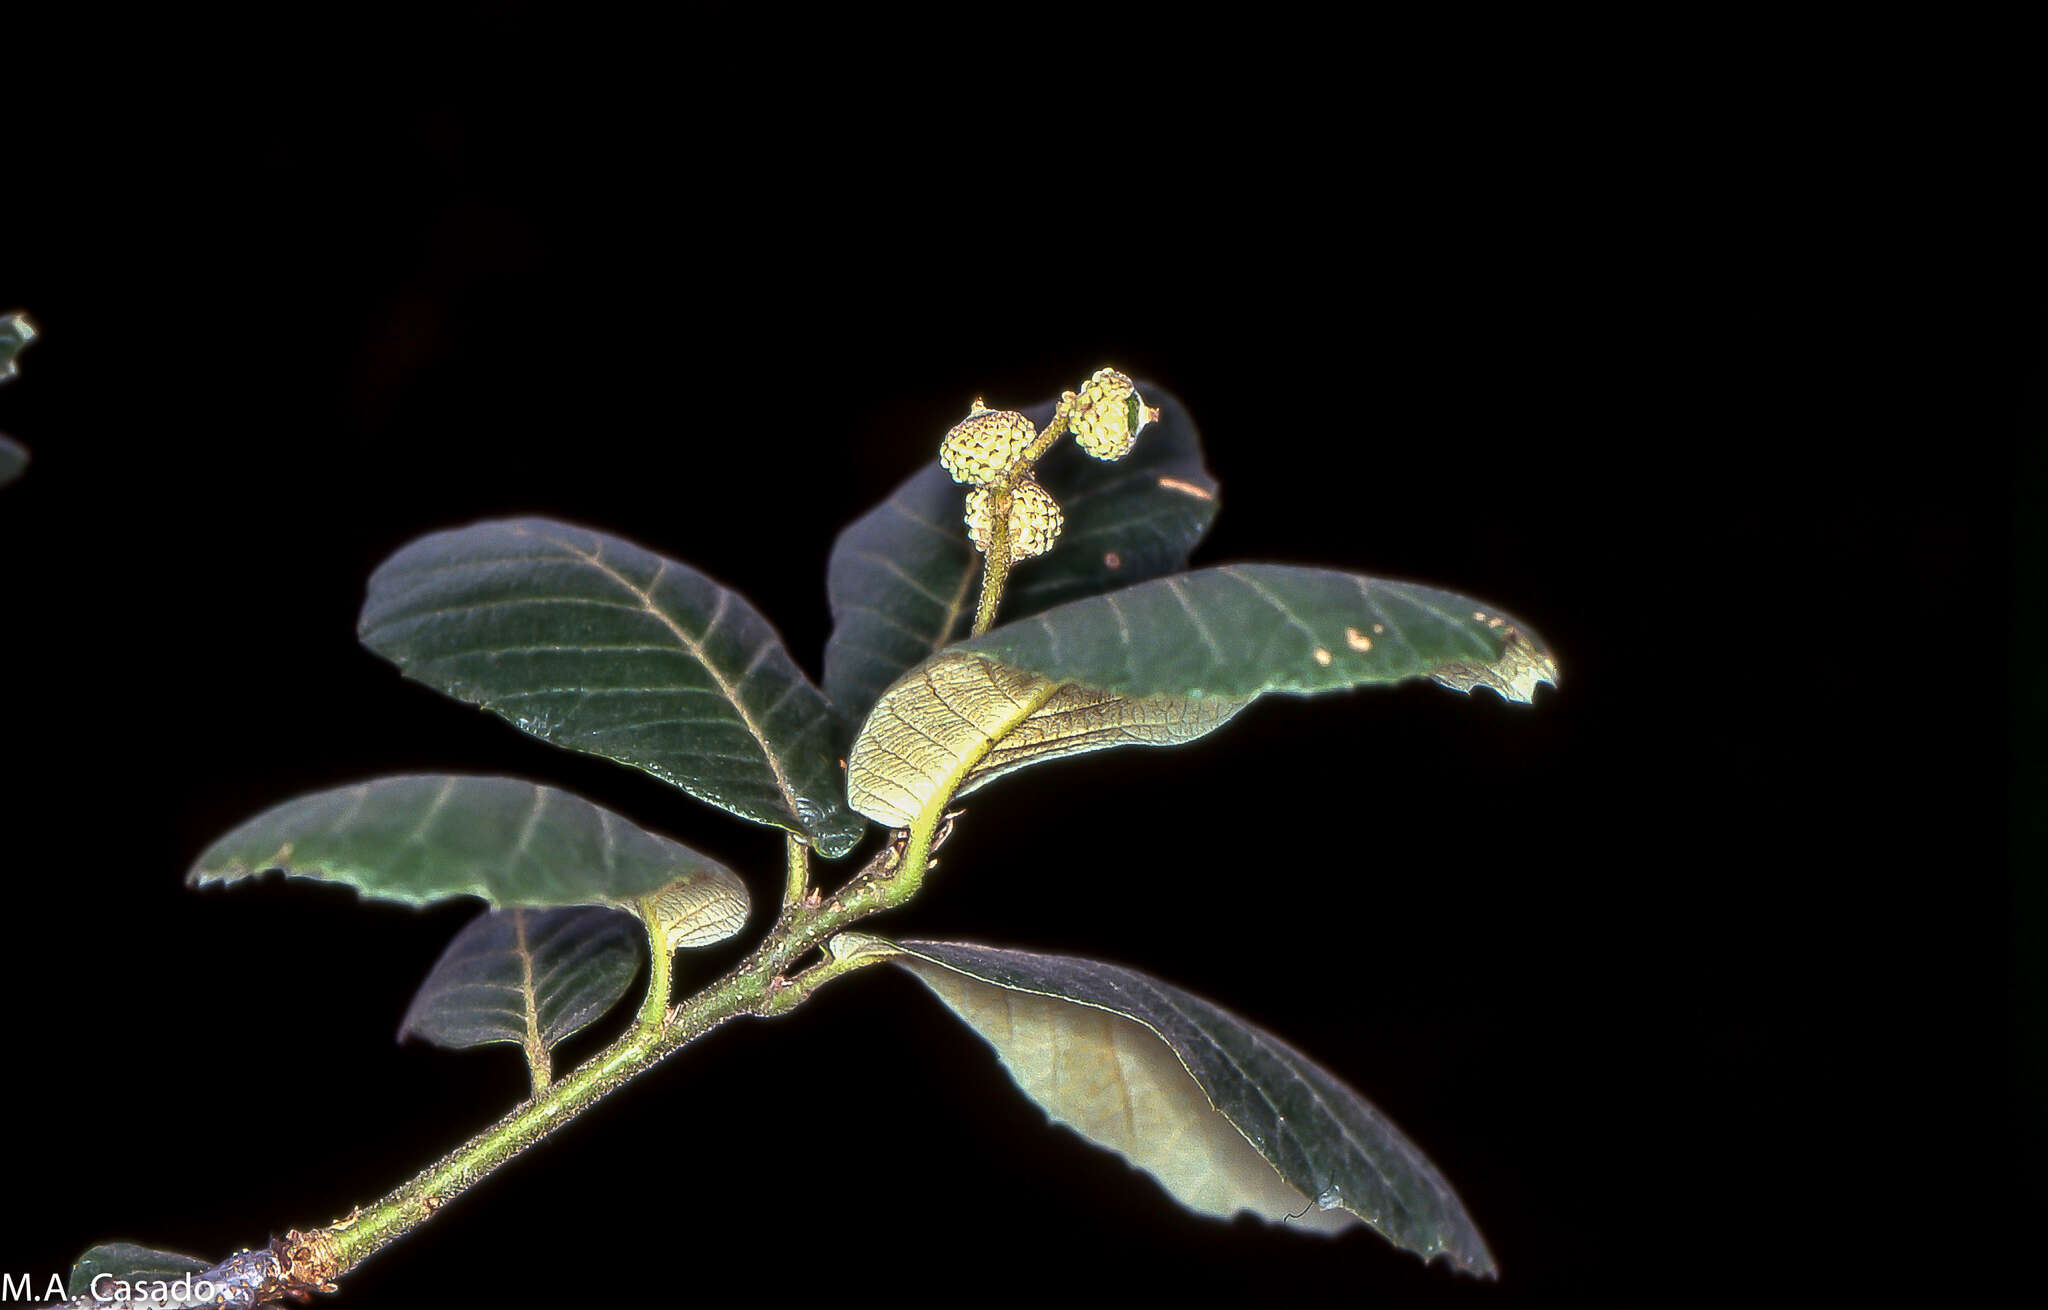 Image of Quercus sideroxyla Bonpl.